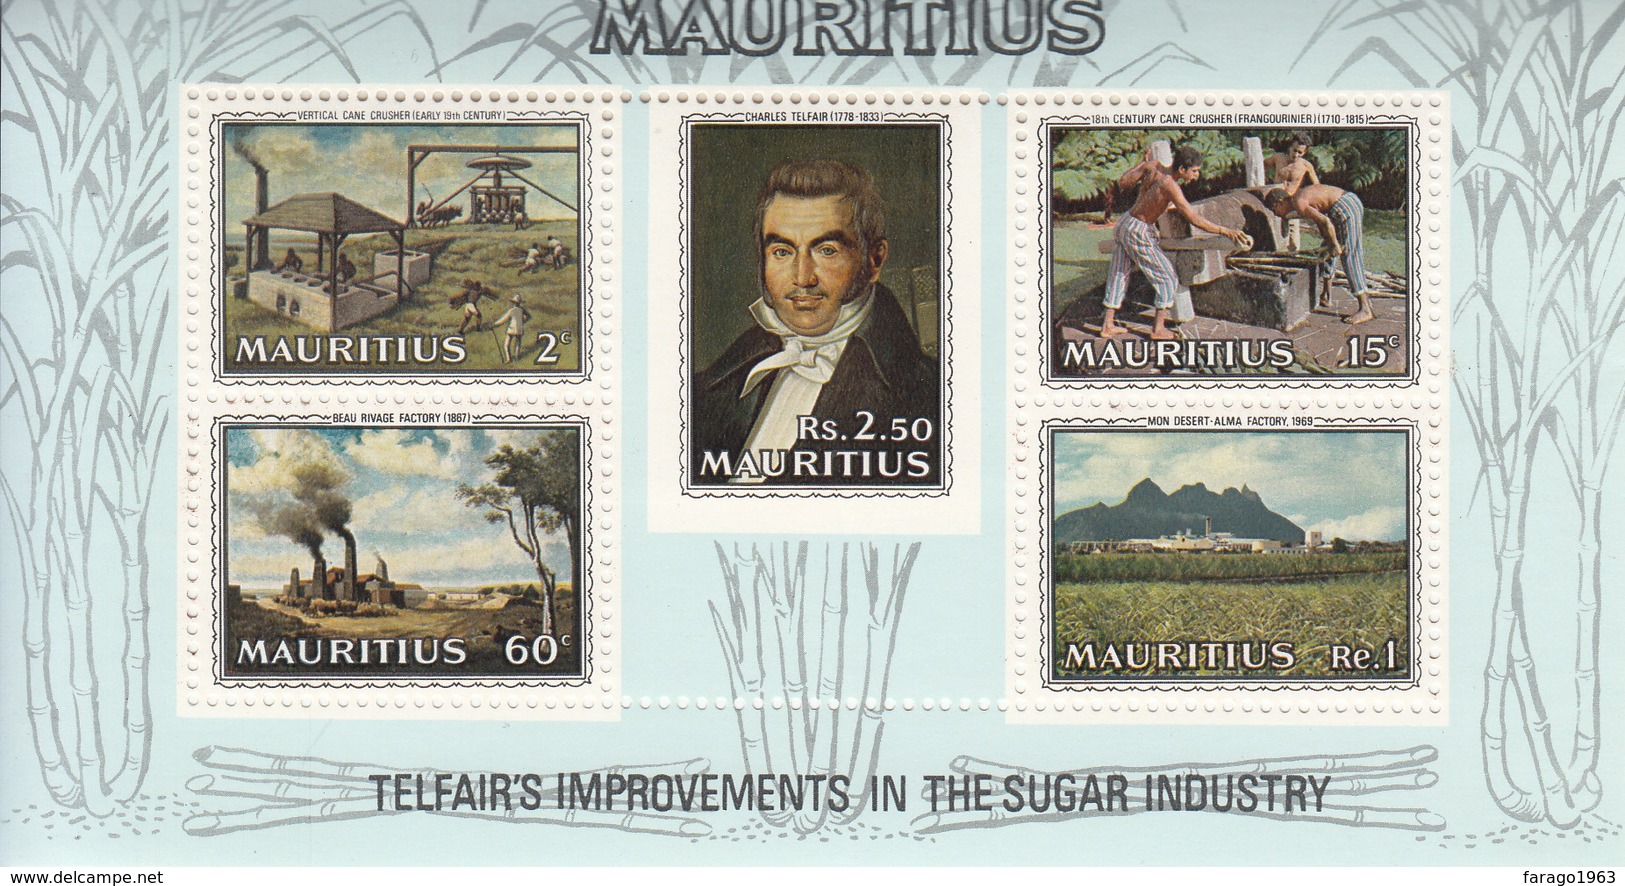 1969 Mauritius Telfair’s Improvements To Sugar Industry Portrait, Cane Crusher, Factory, Plantation  Souvenir Sheet Of 5 - Maurice (1968-...)